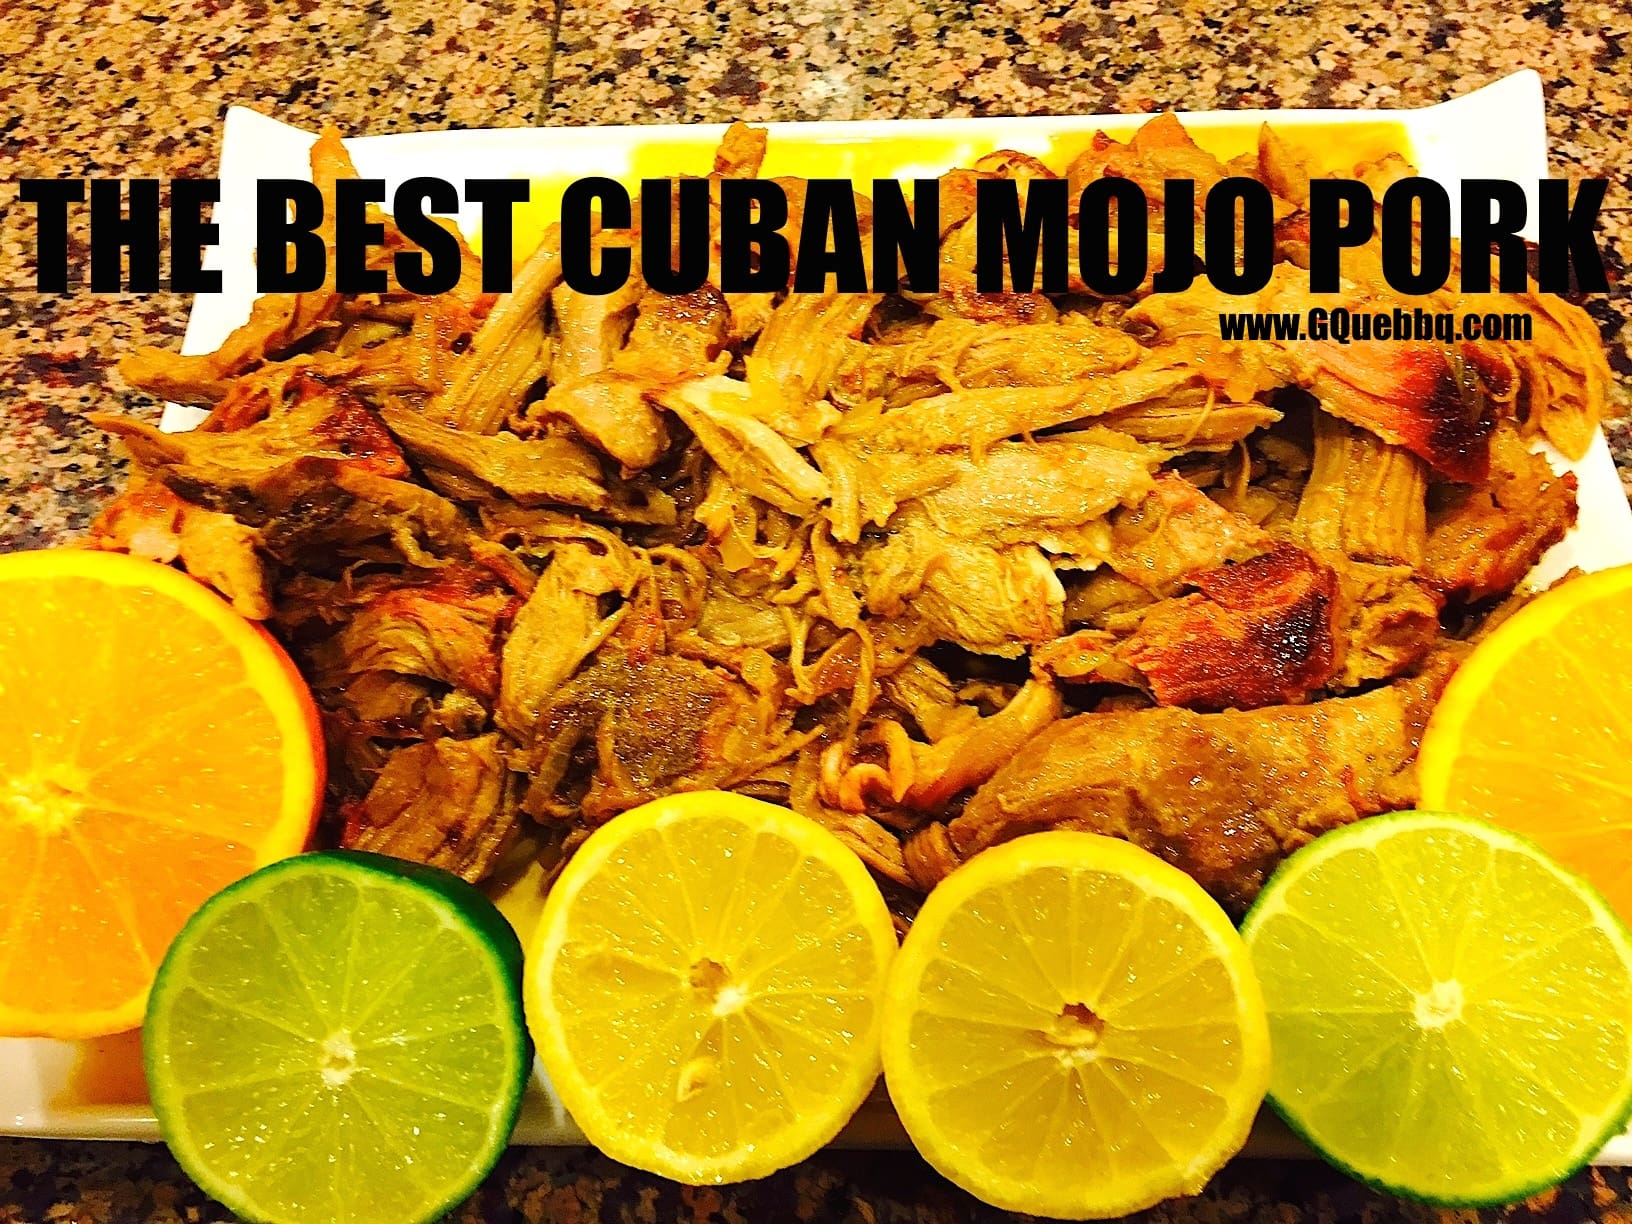 Cuban Mojo Pork